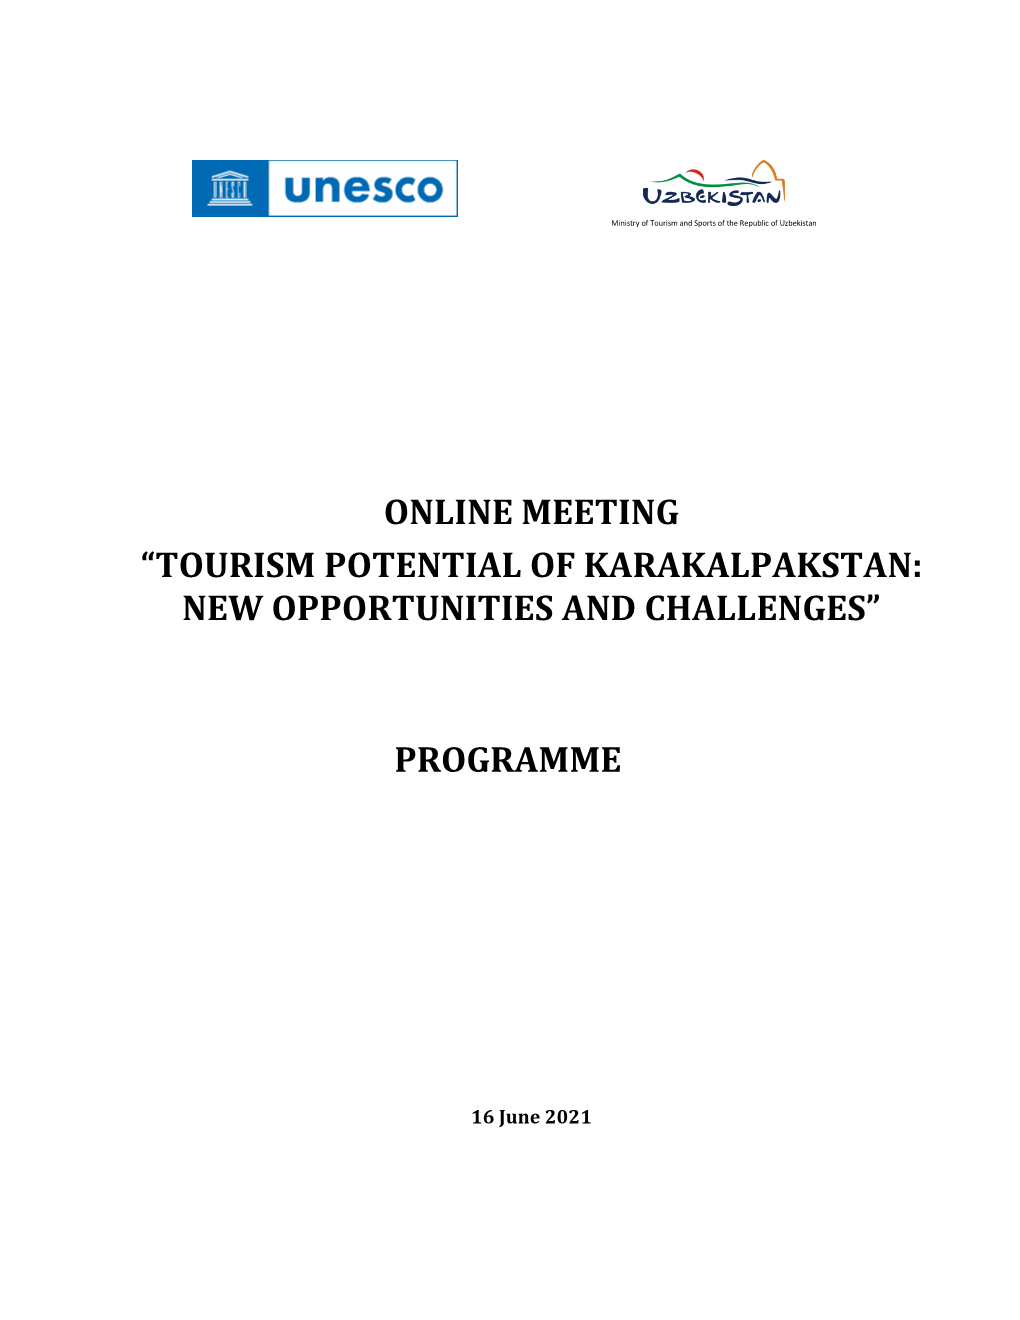 Online Meeting “Tourism Potential of Karakalpakstan: New Opportunities and Challenges”